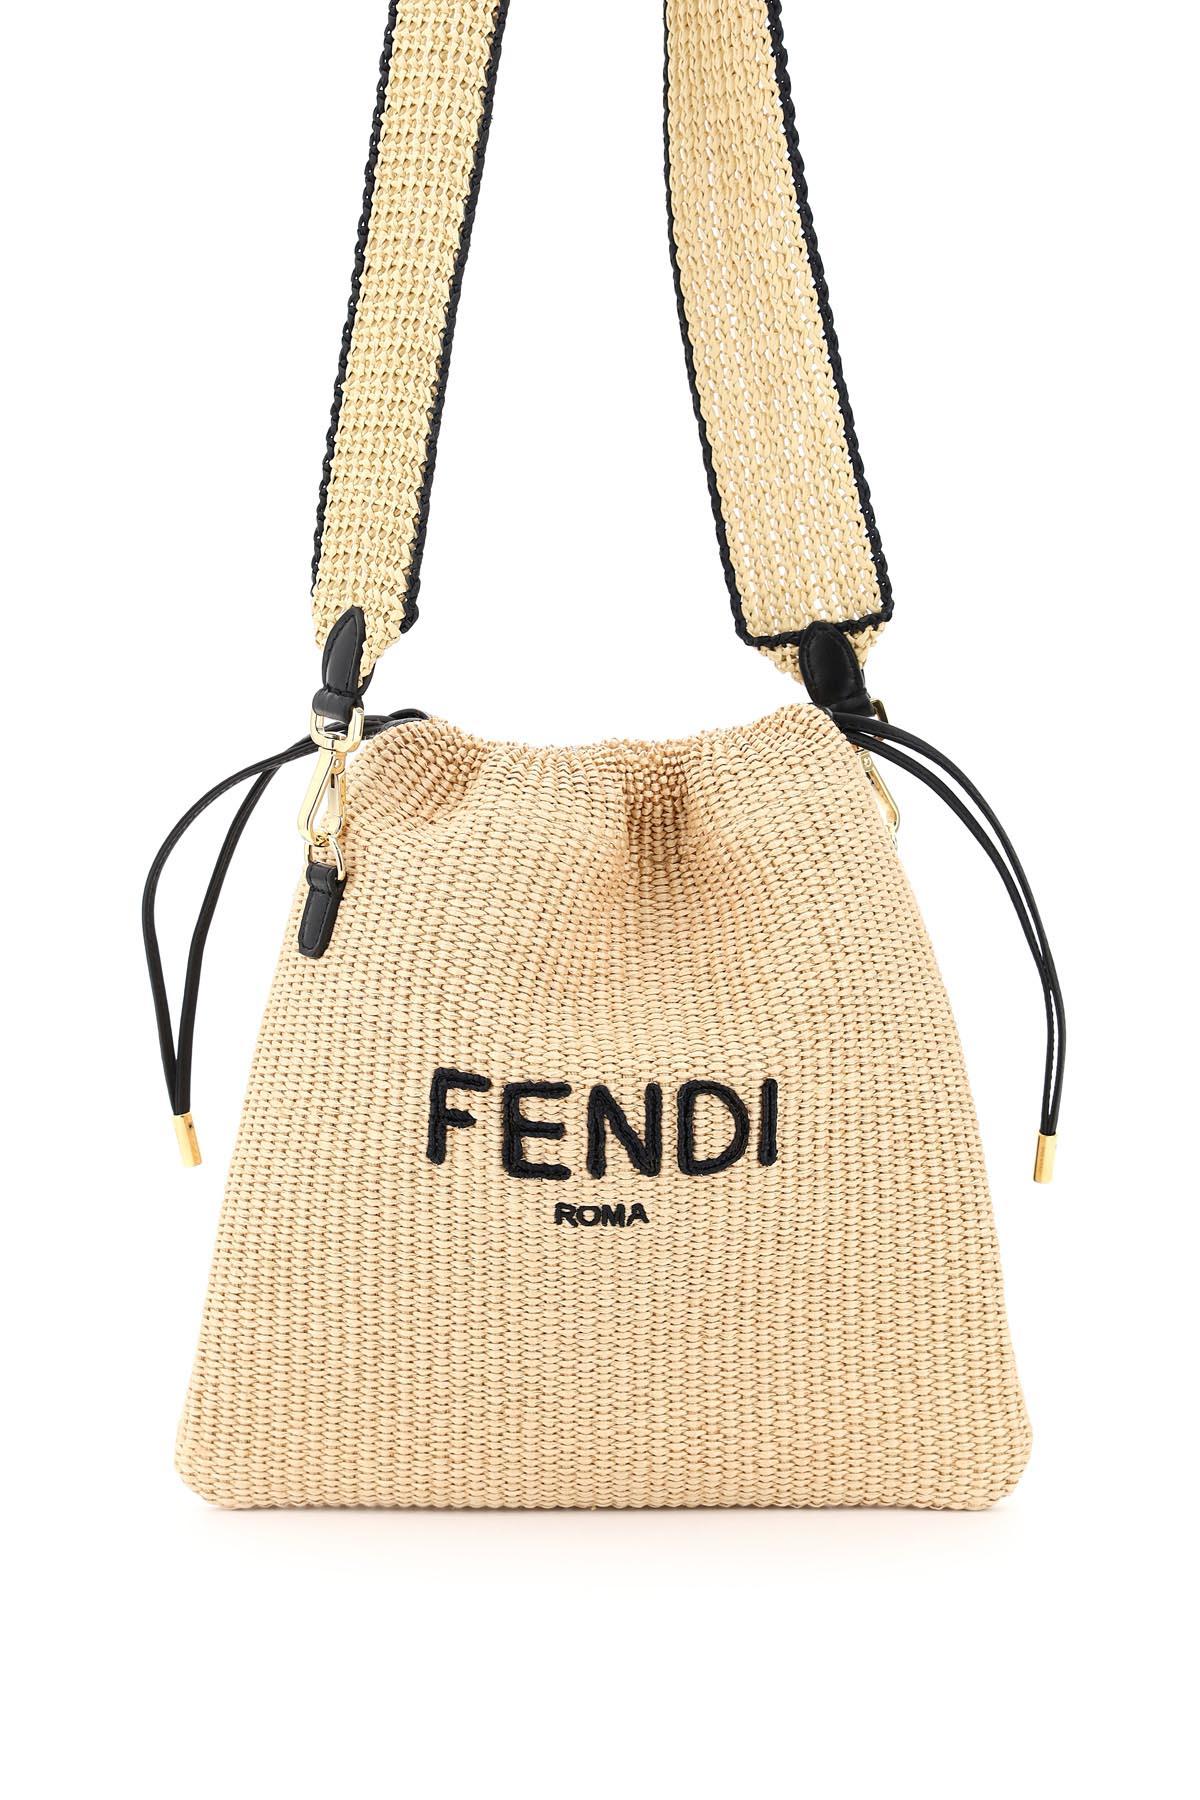 Fendi Pack Small Raffia Pouch in Natural | Lyst